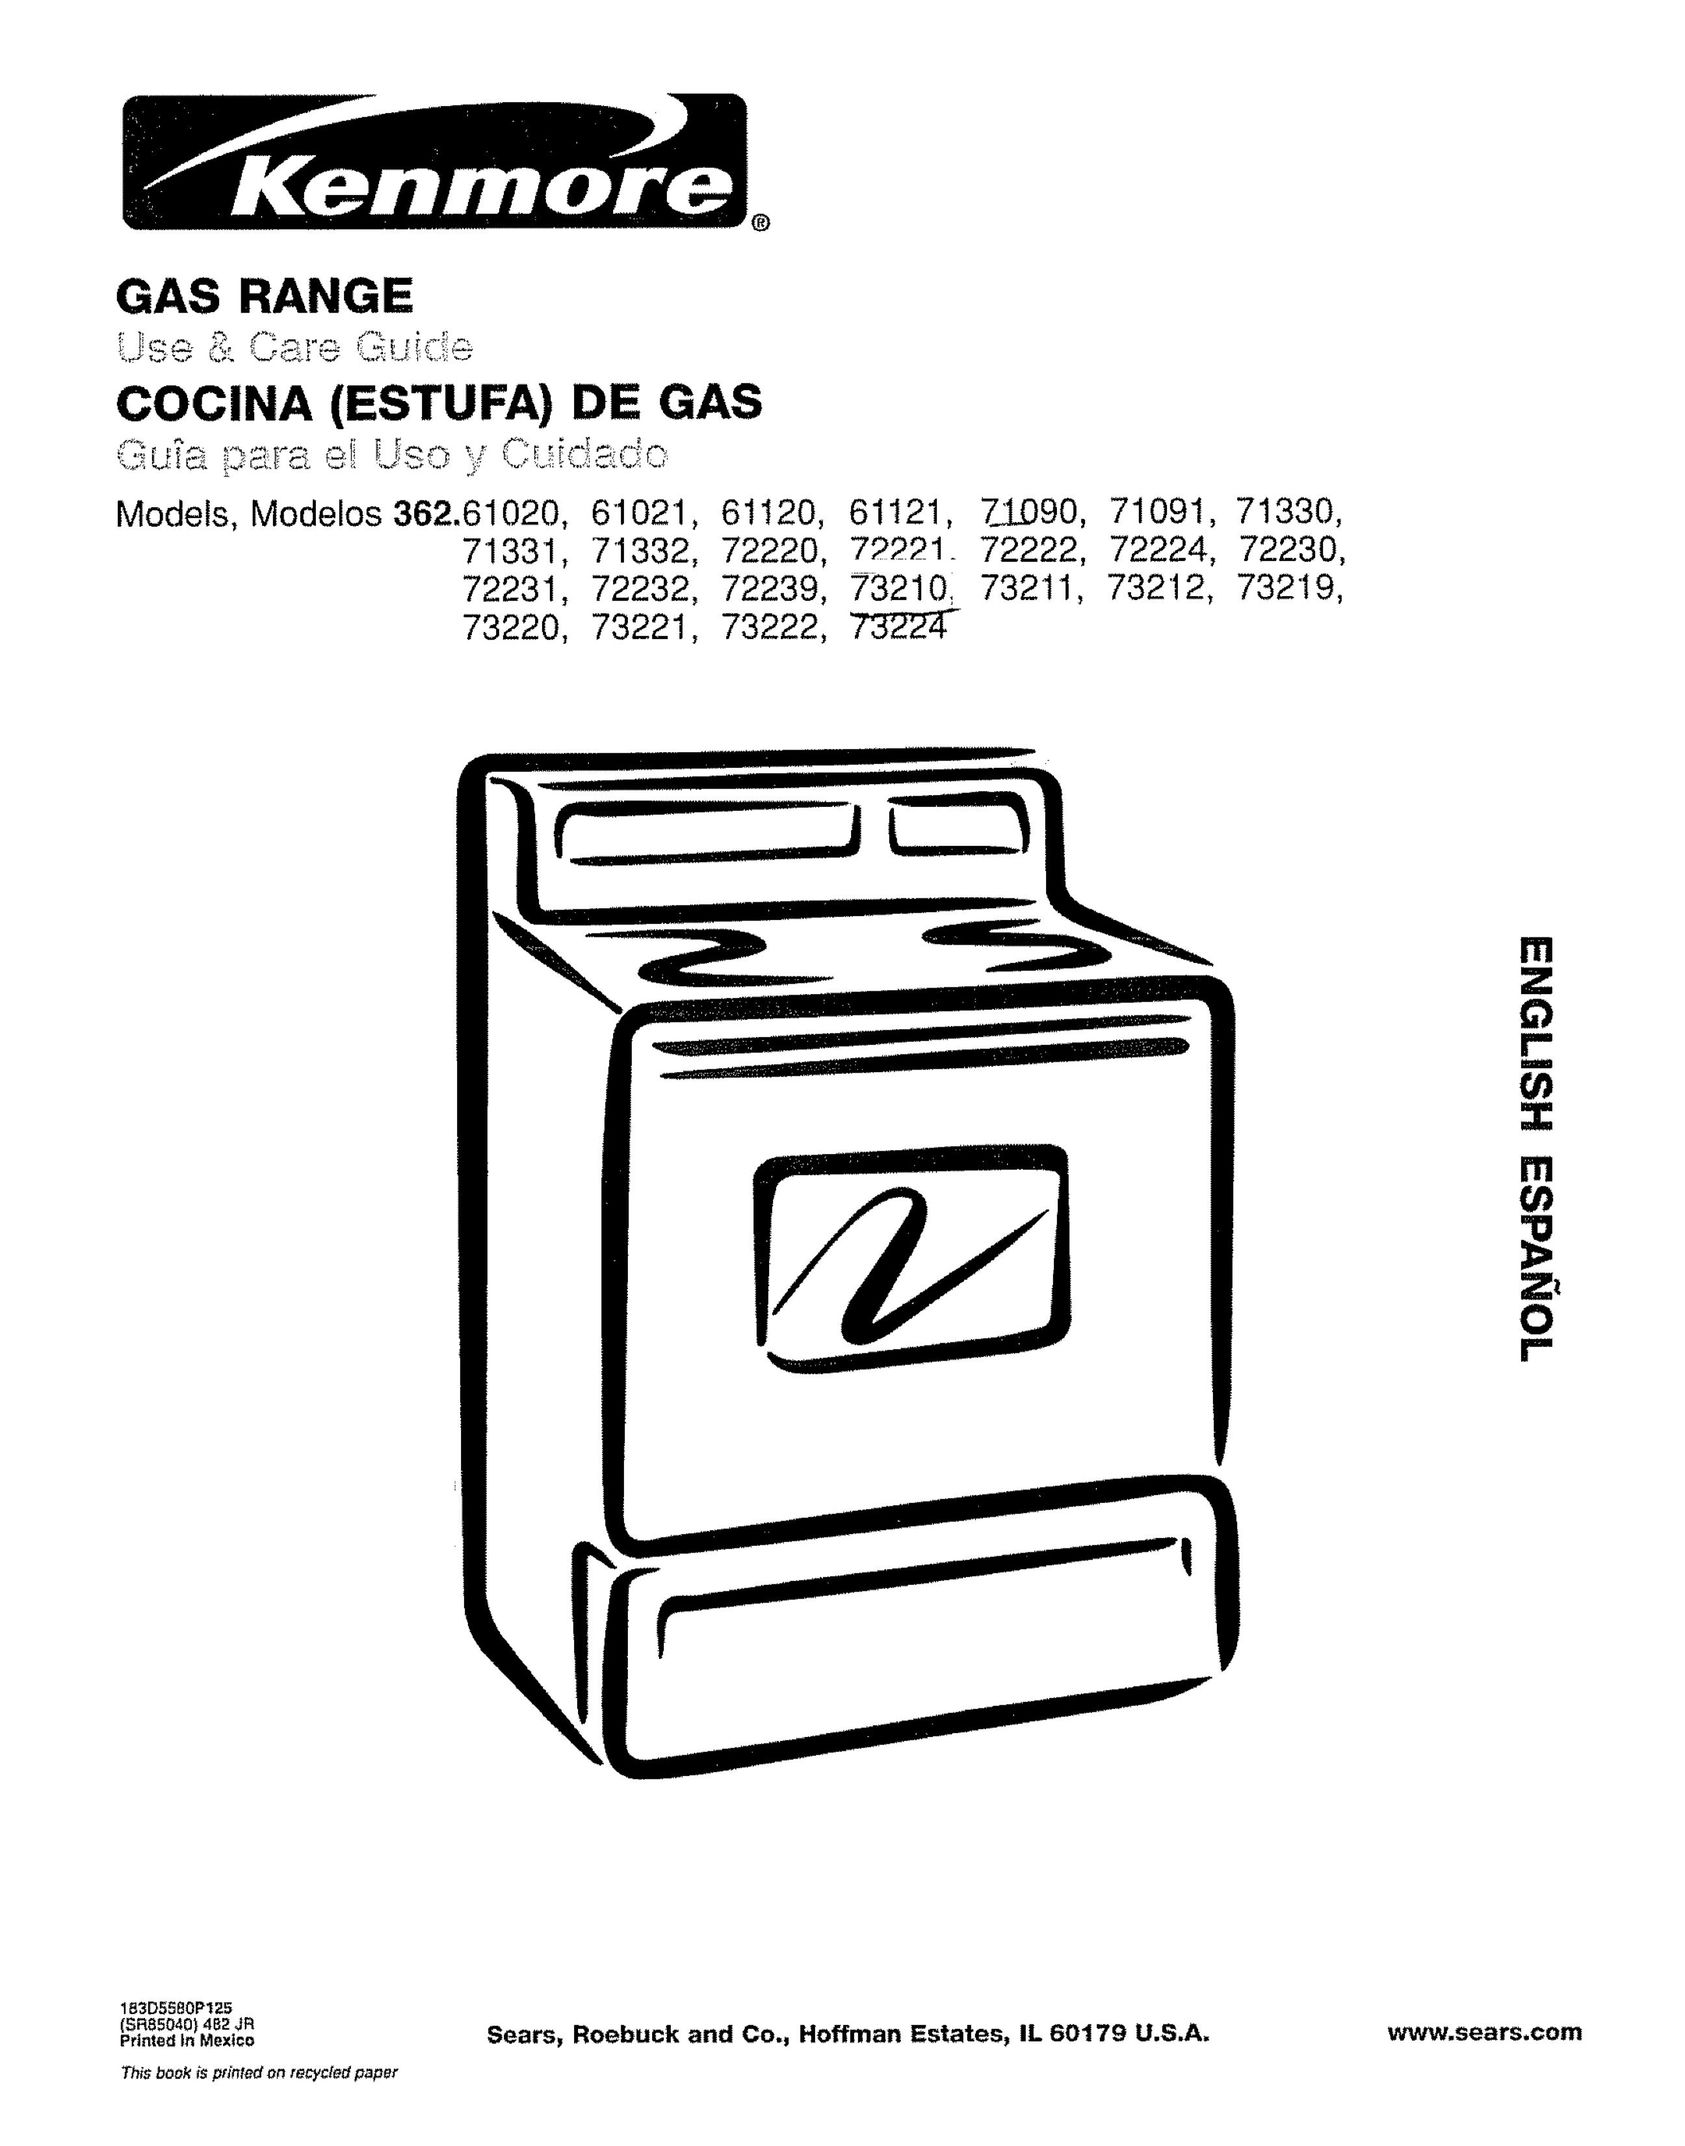 Kenmore 362.61121 Range User Manual